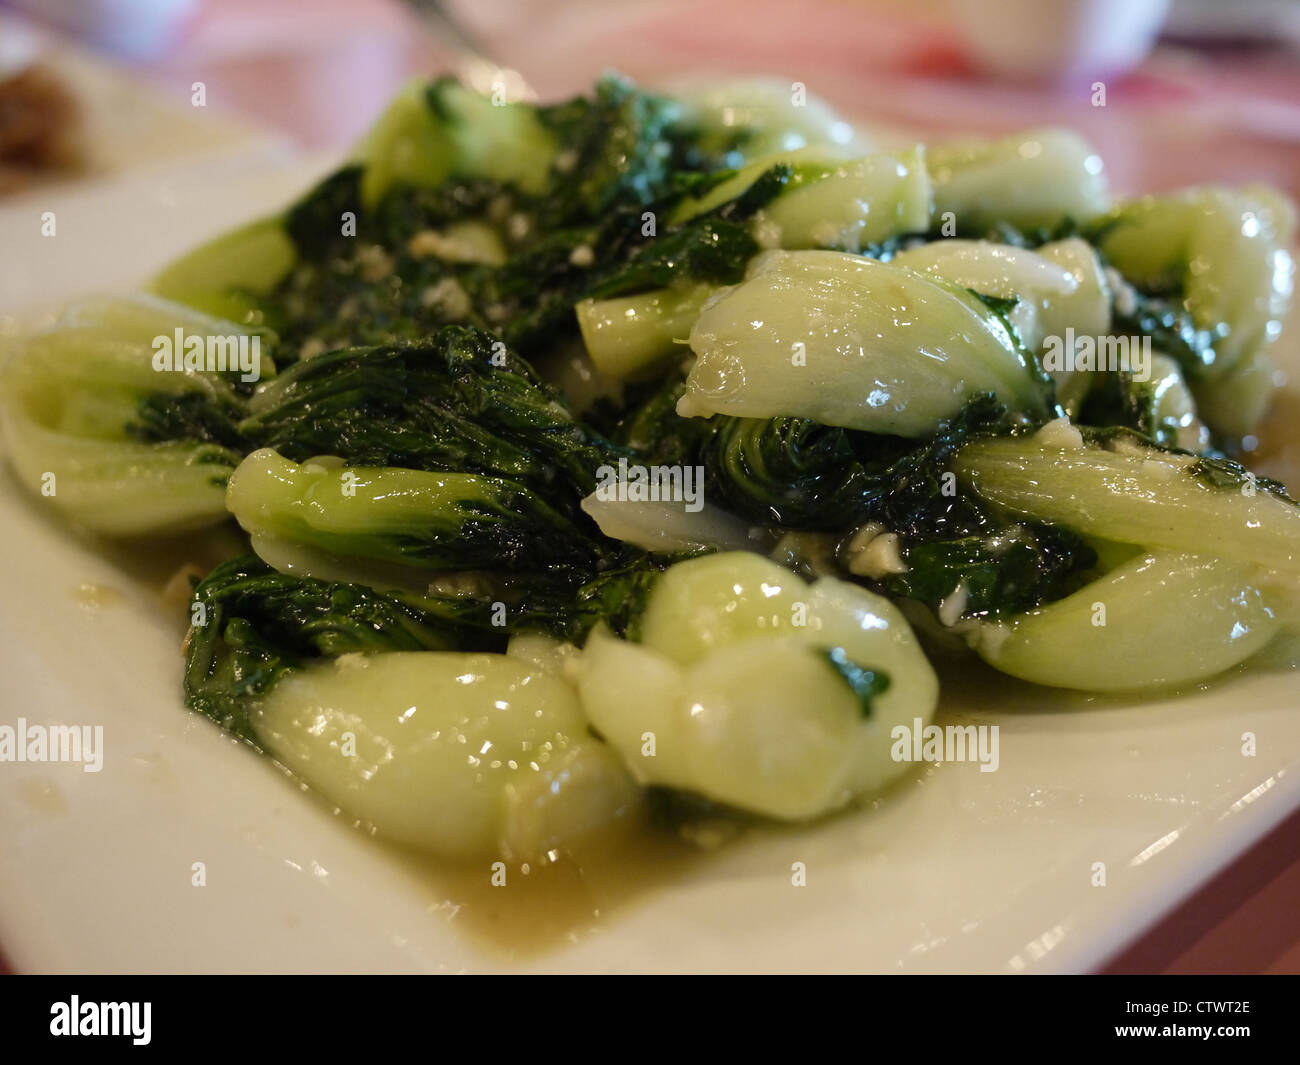 Bak choy chino verduras ajo fuente Foto de stock